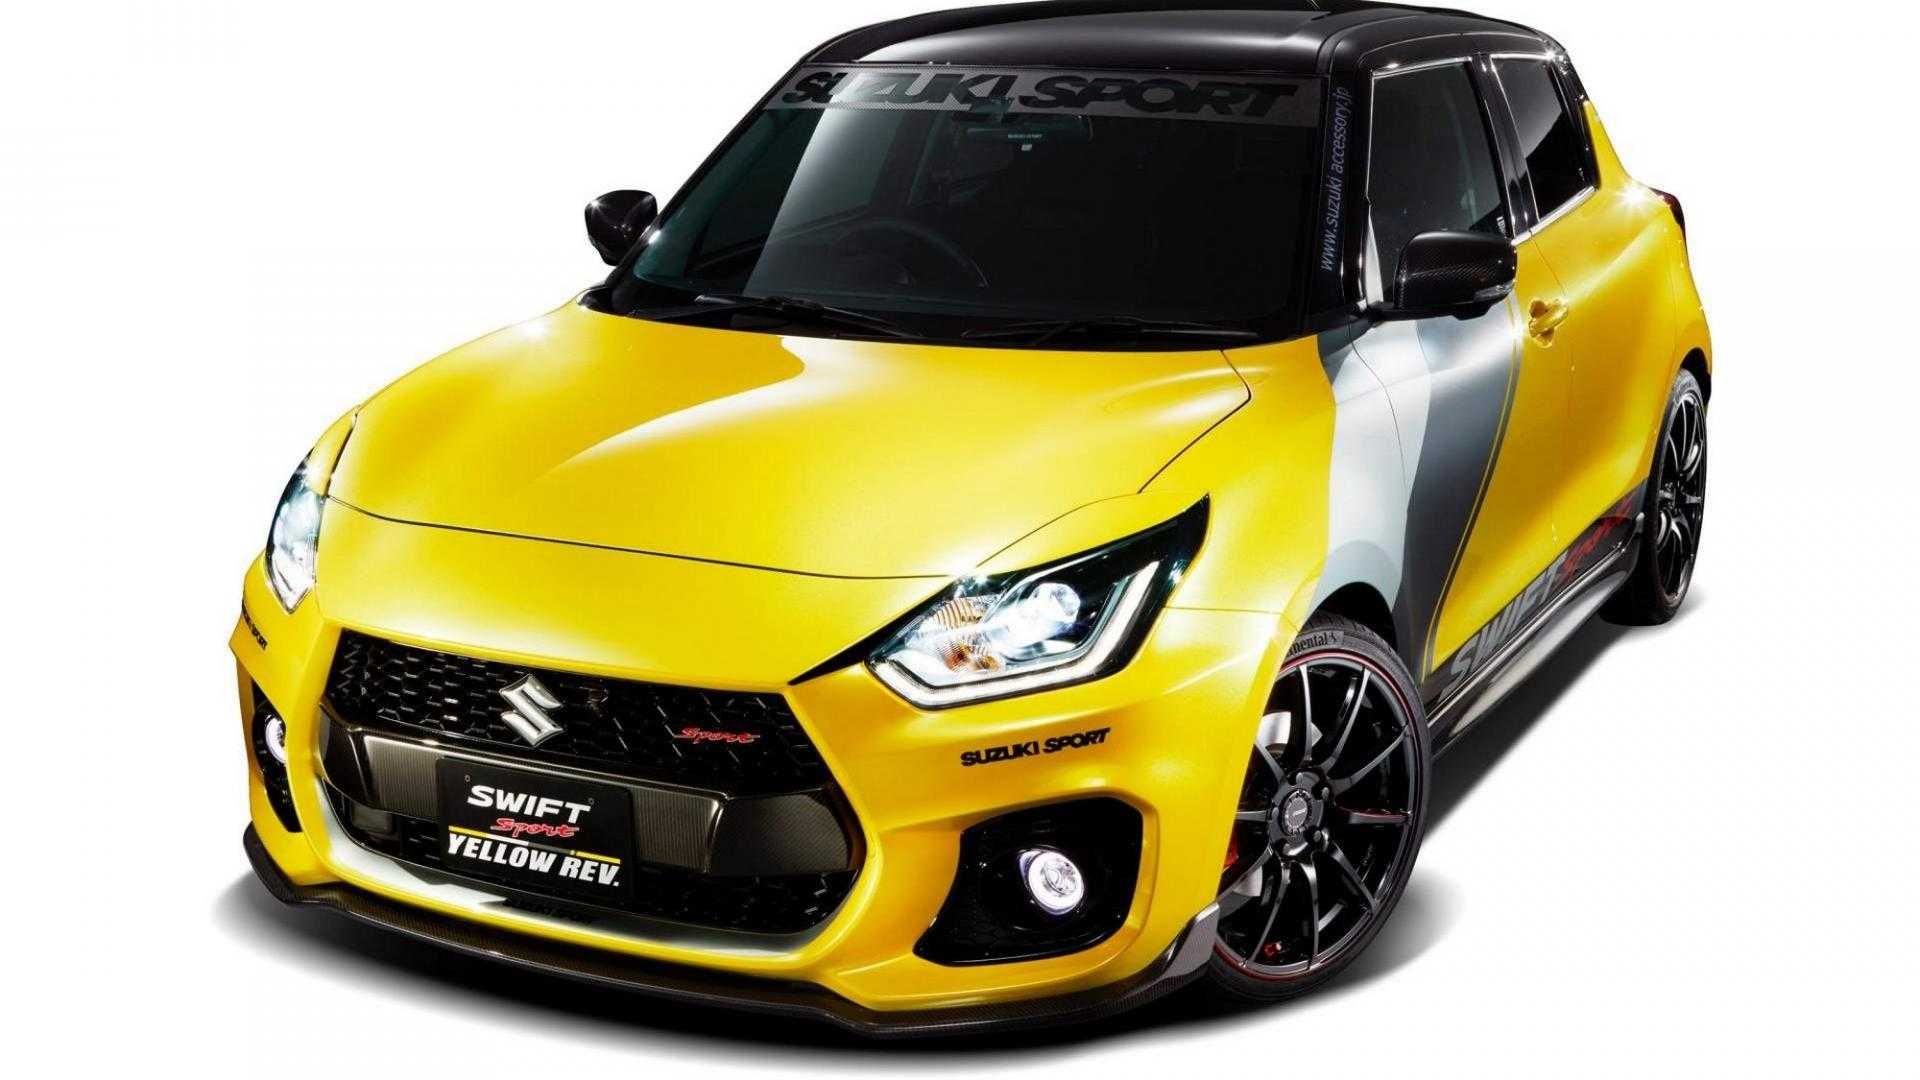 2019 Suzuki Swift Sports Yellow Rev